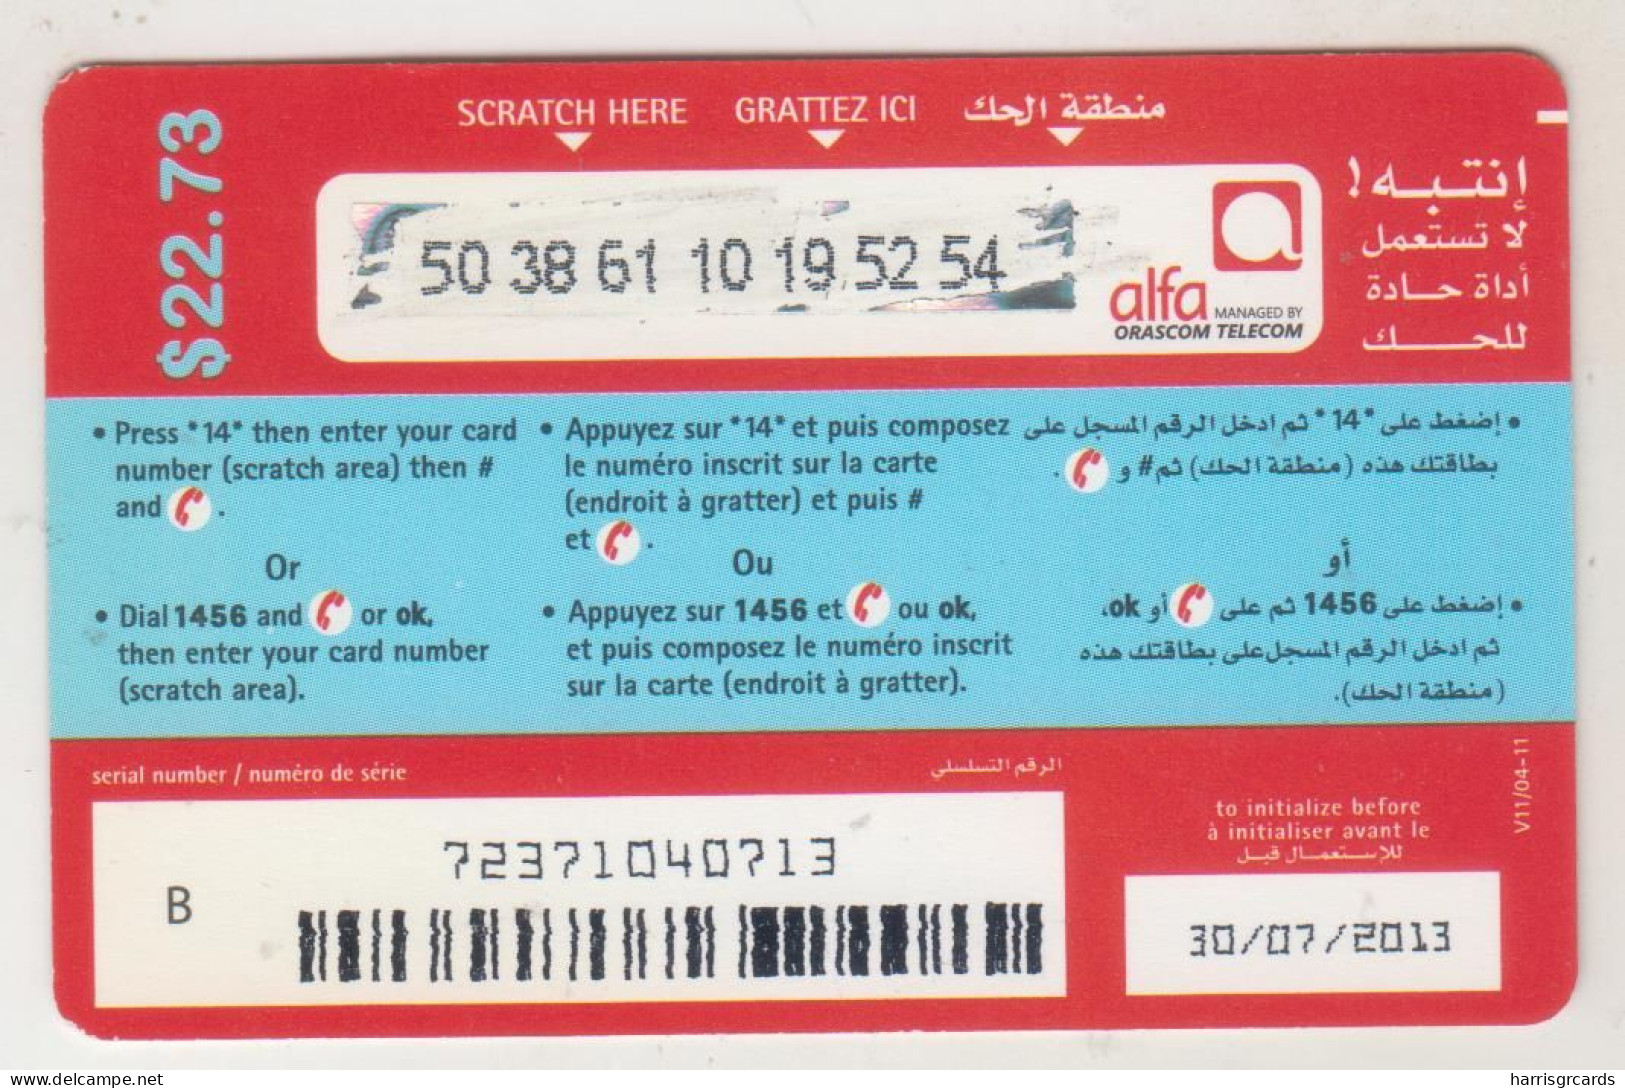 LEBANON - Jbeil Sea View , Alfa Recharge Card 22.73$, Exp.date 30/07/13, Used - Libano